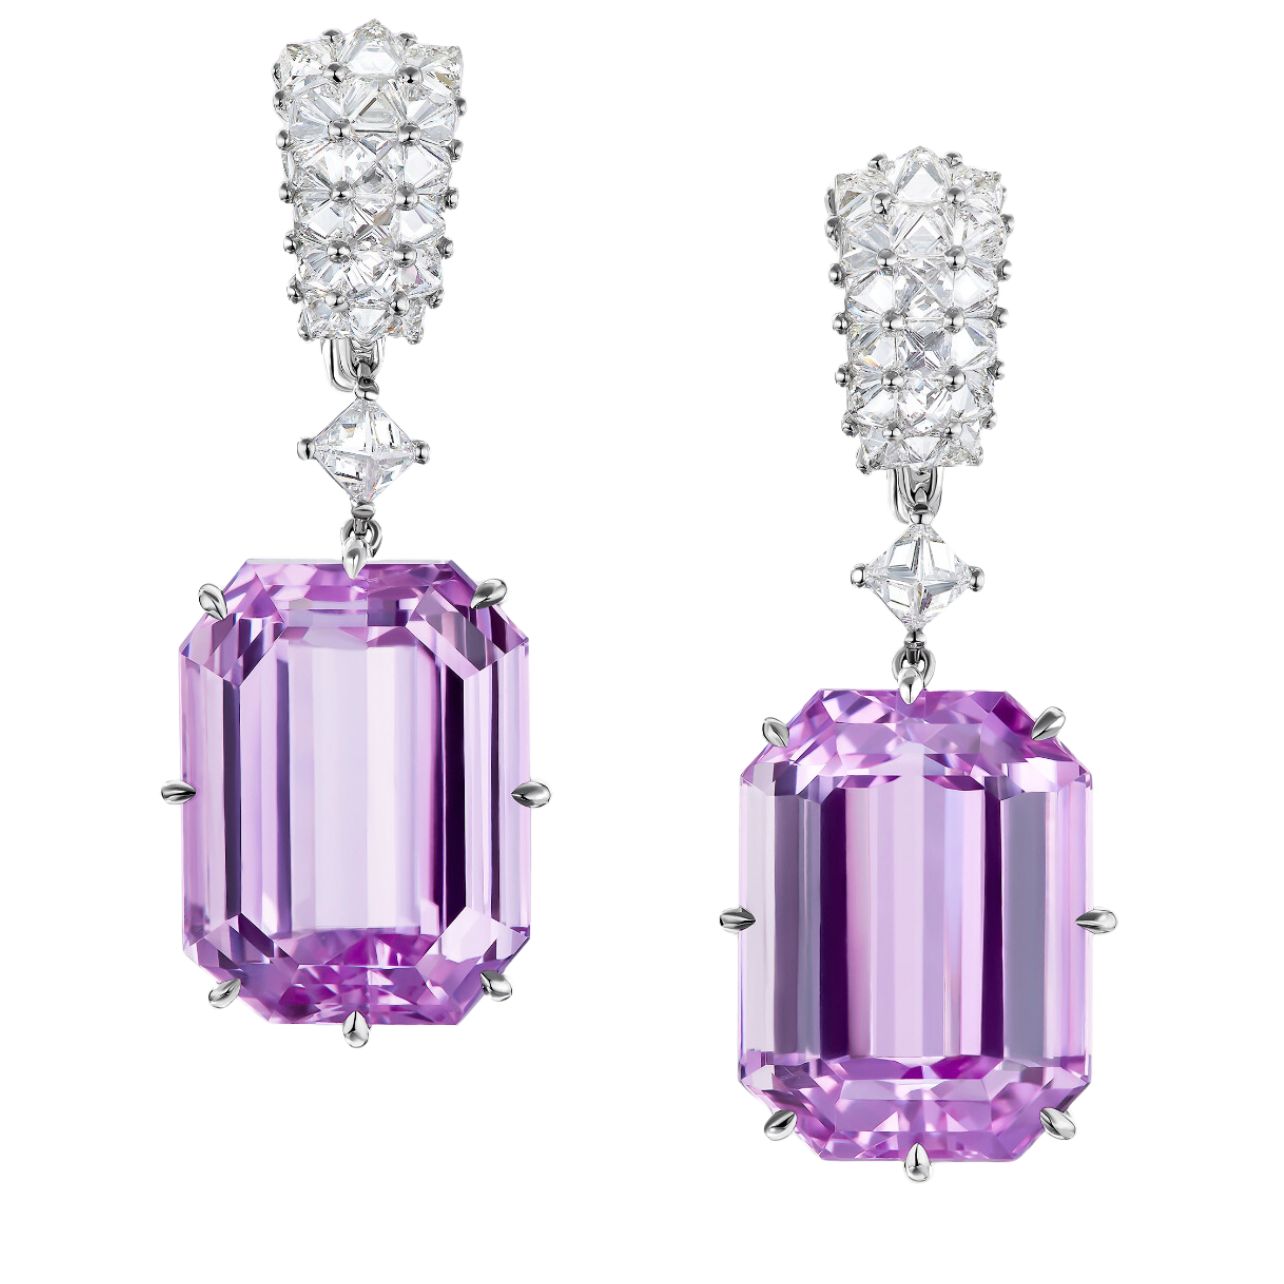 High Jewelry Reverse Set drop earrings with kunzites and white diamonds.